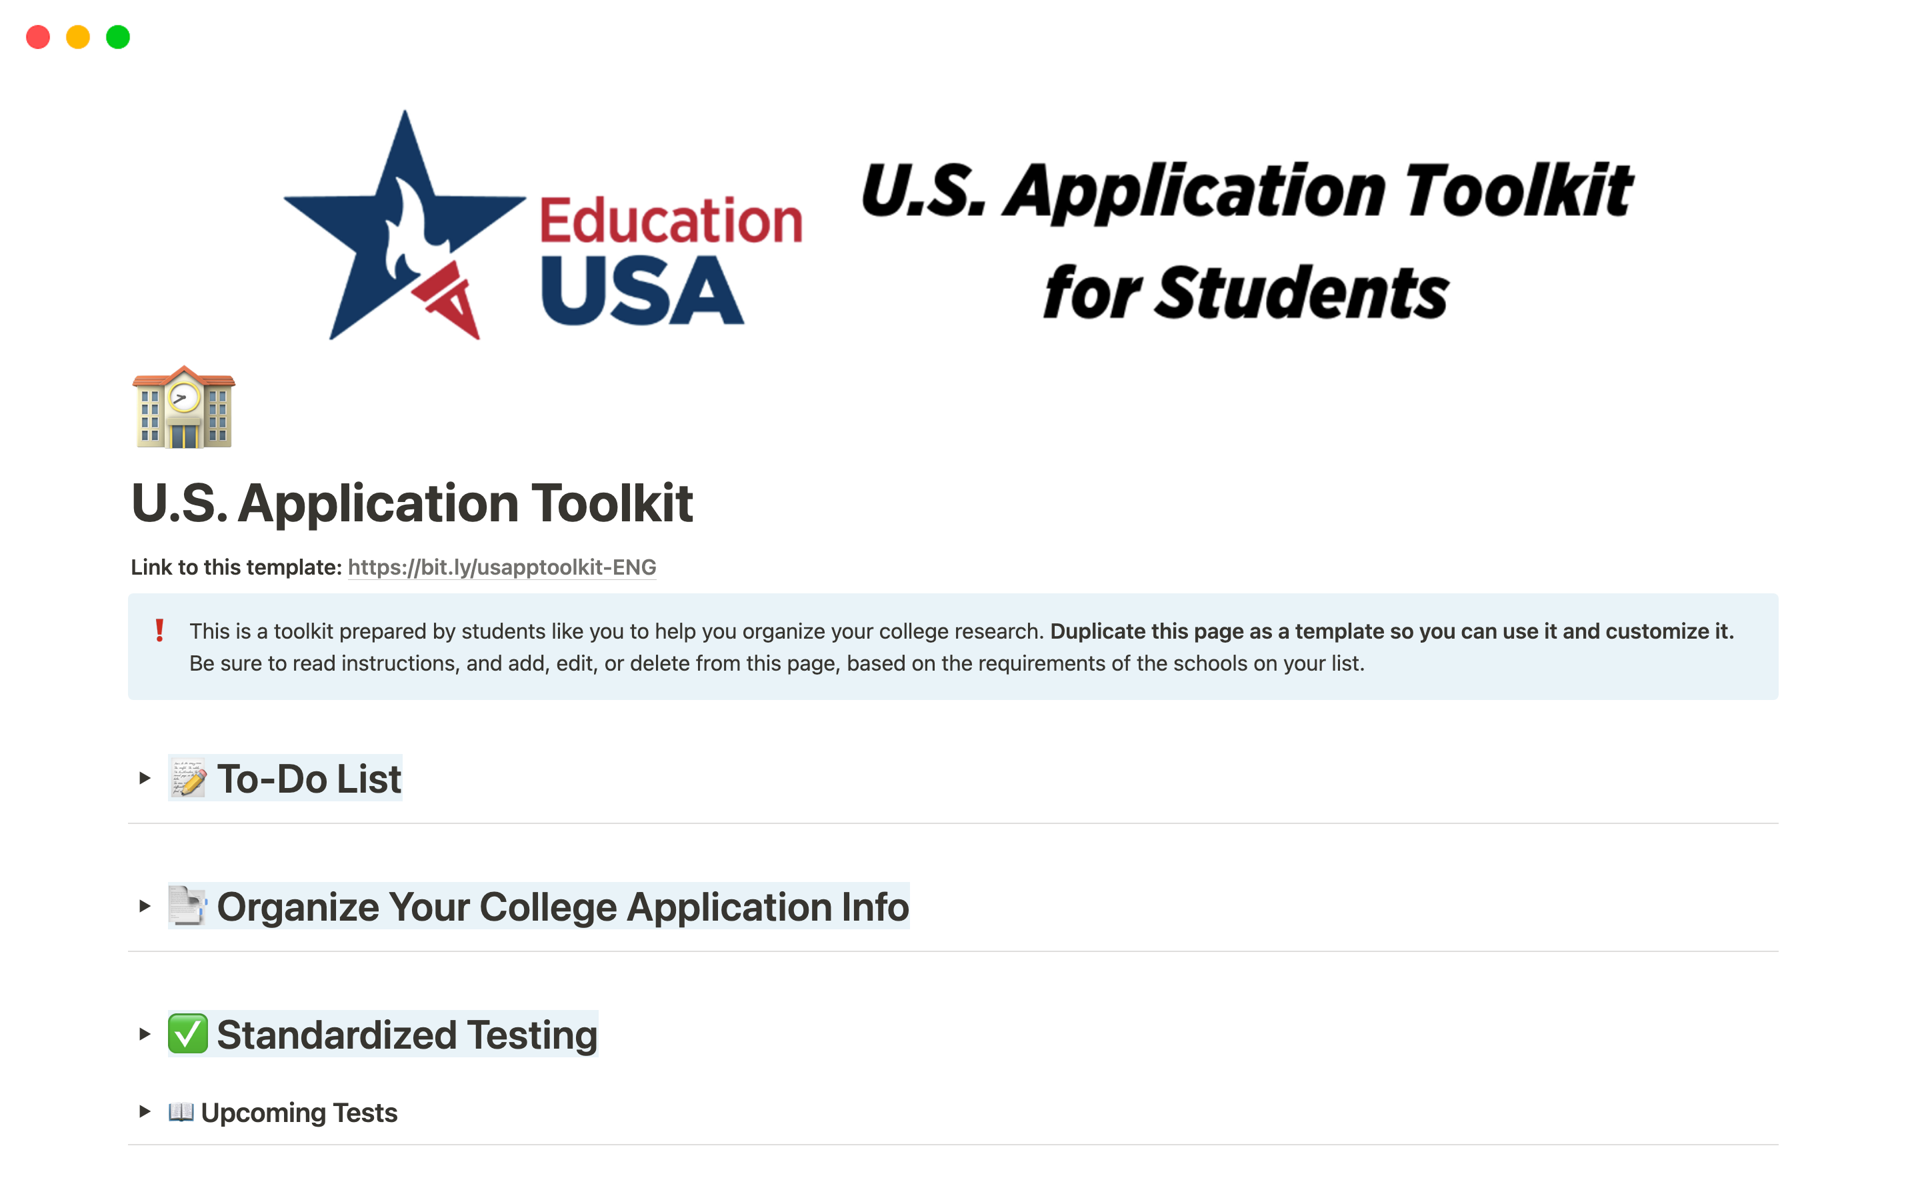 EducationUSA U.S. Application Toolkit님의 템플릿 미리보기